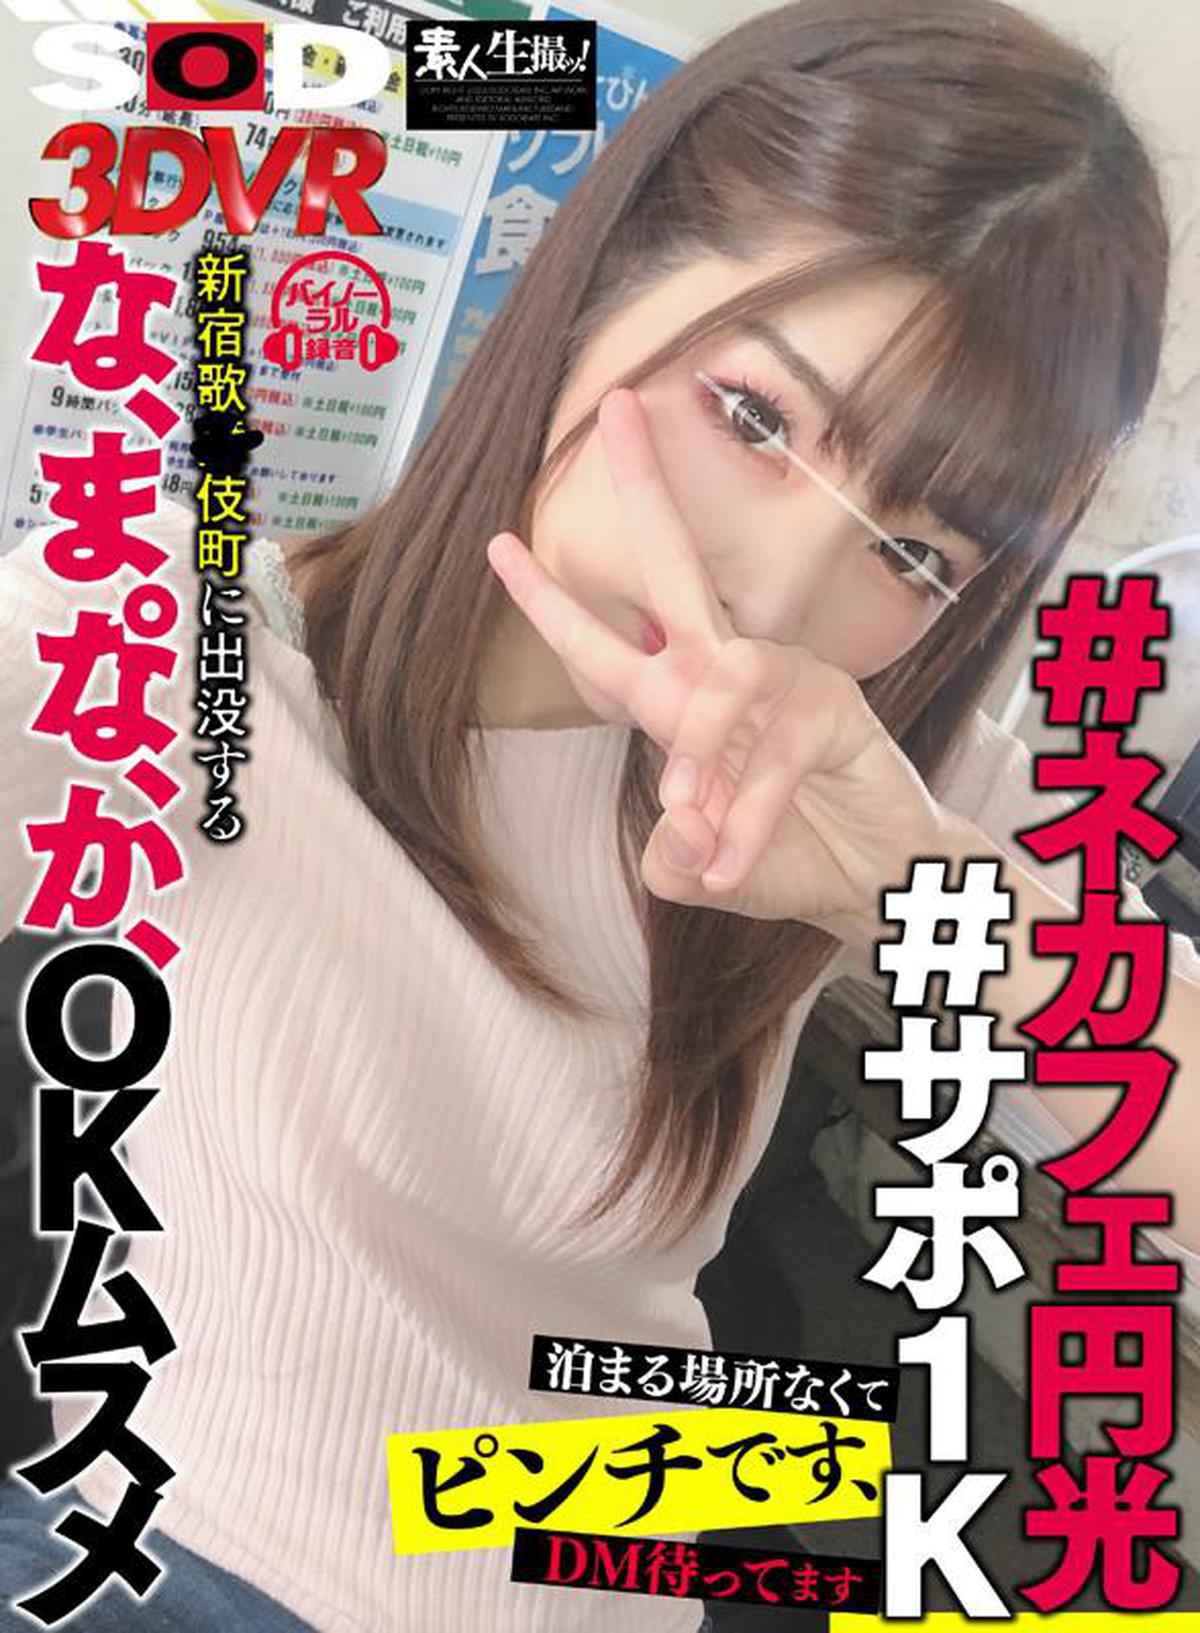 (VR) 3DSVR-0656 #Necafe Enko #Support 1K 我手头拮据，因为我没有地方住，我在等DM新宿歌舞伎○不要出现在歌舞伎町。嗯，好的娘